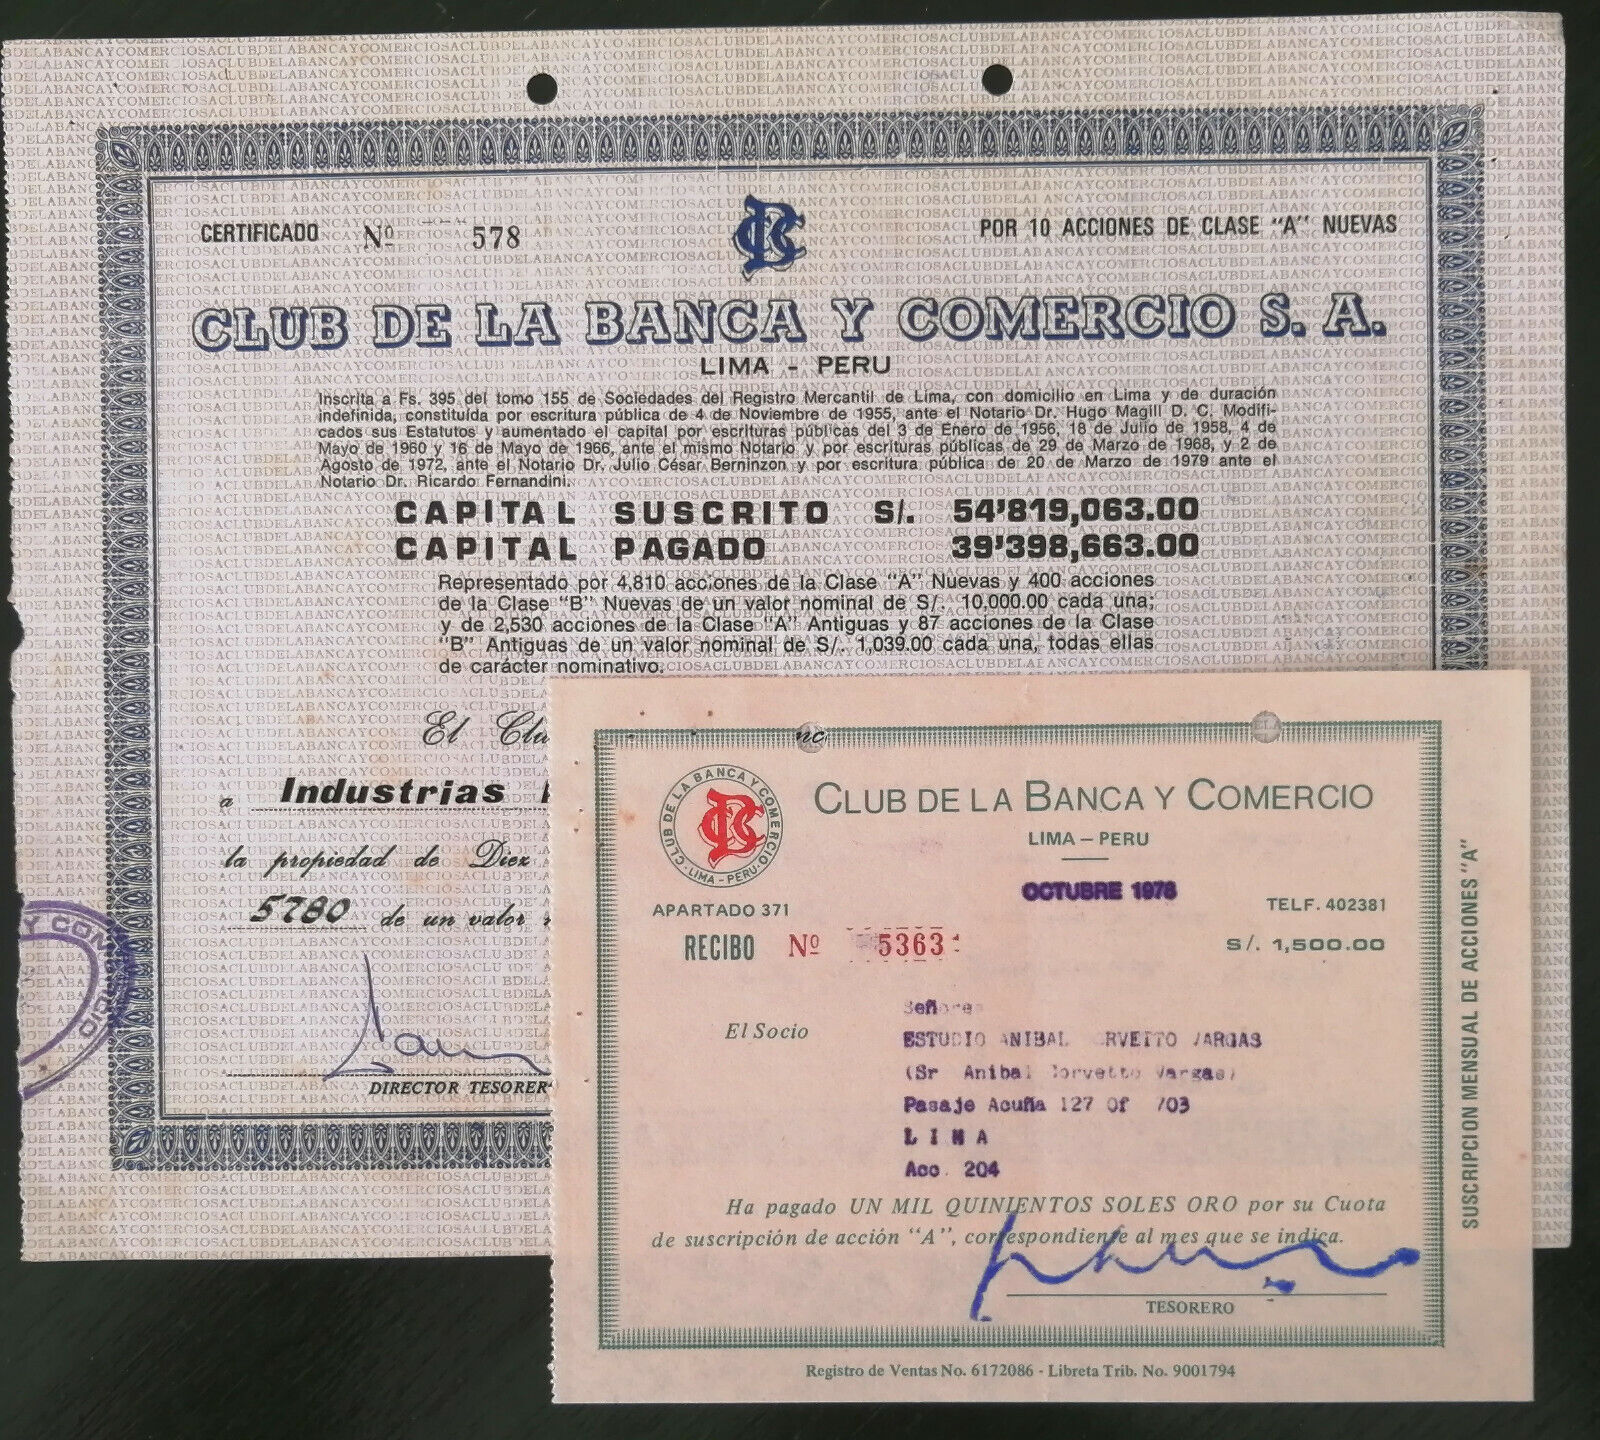 Peru Club De La Banca Y Comercio 10 Shares B 1980, Association Banking Commerce